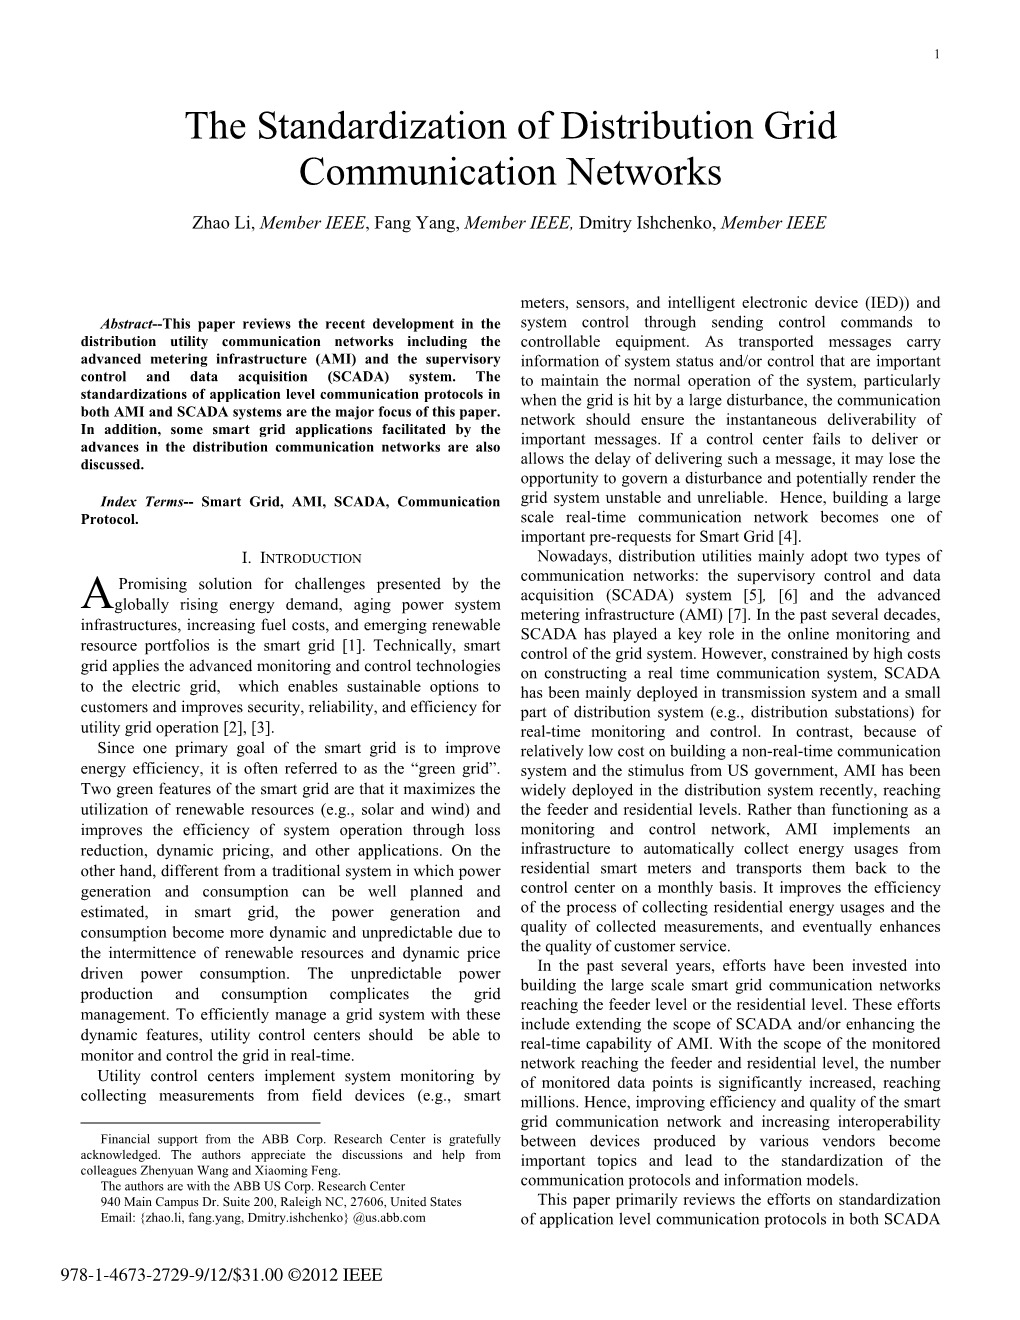 The Standardization of Distribution Grid Communication Networks